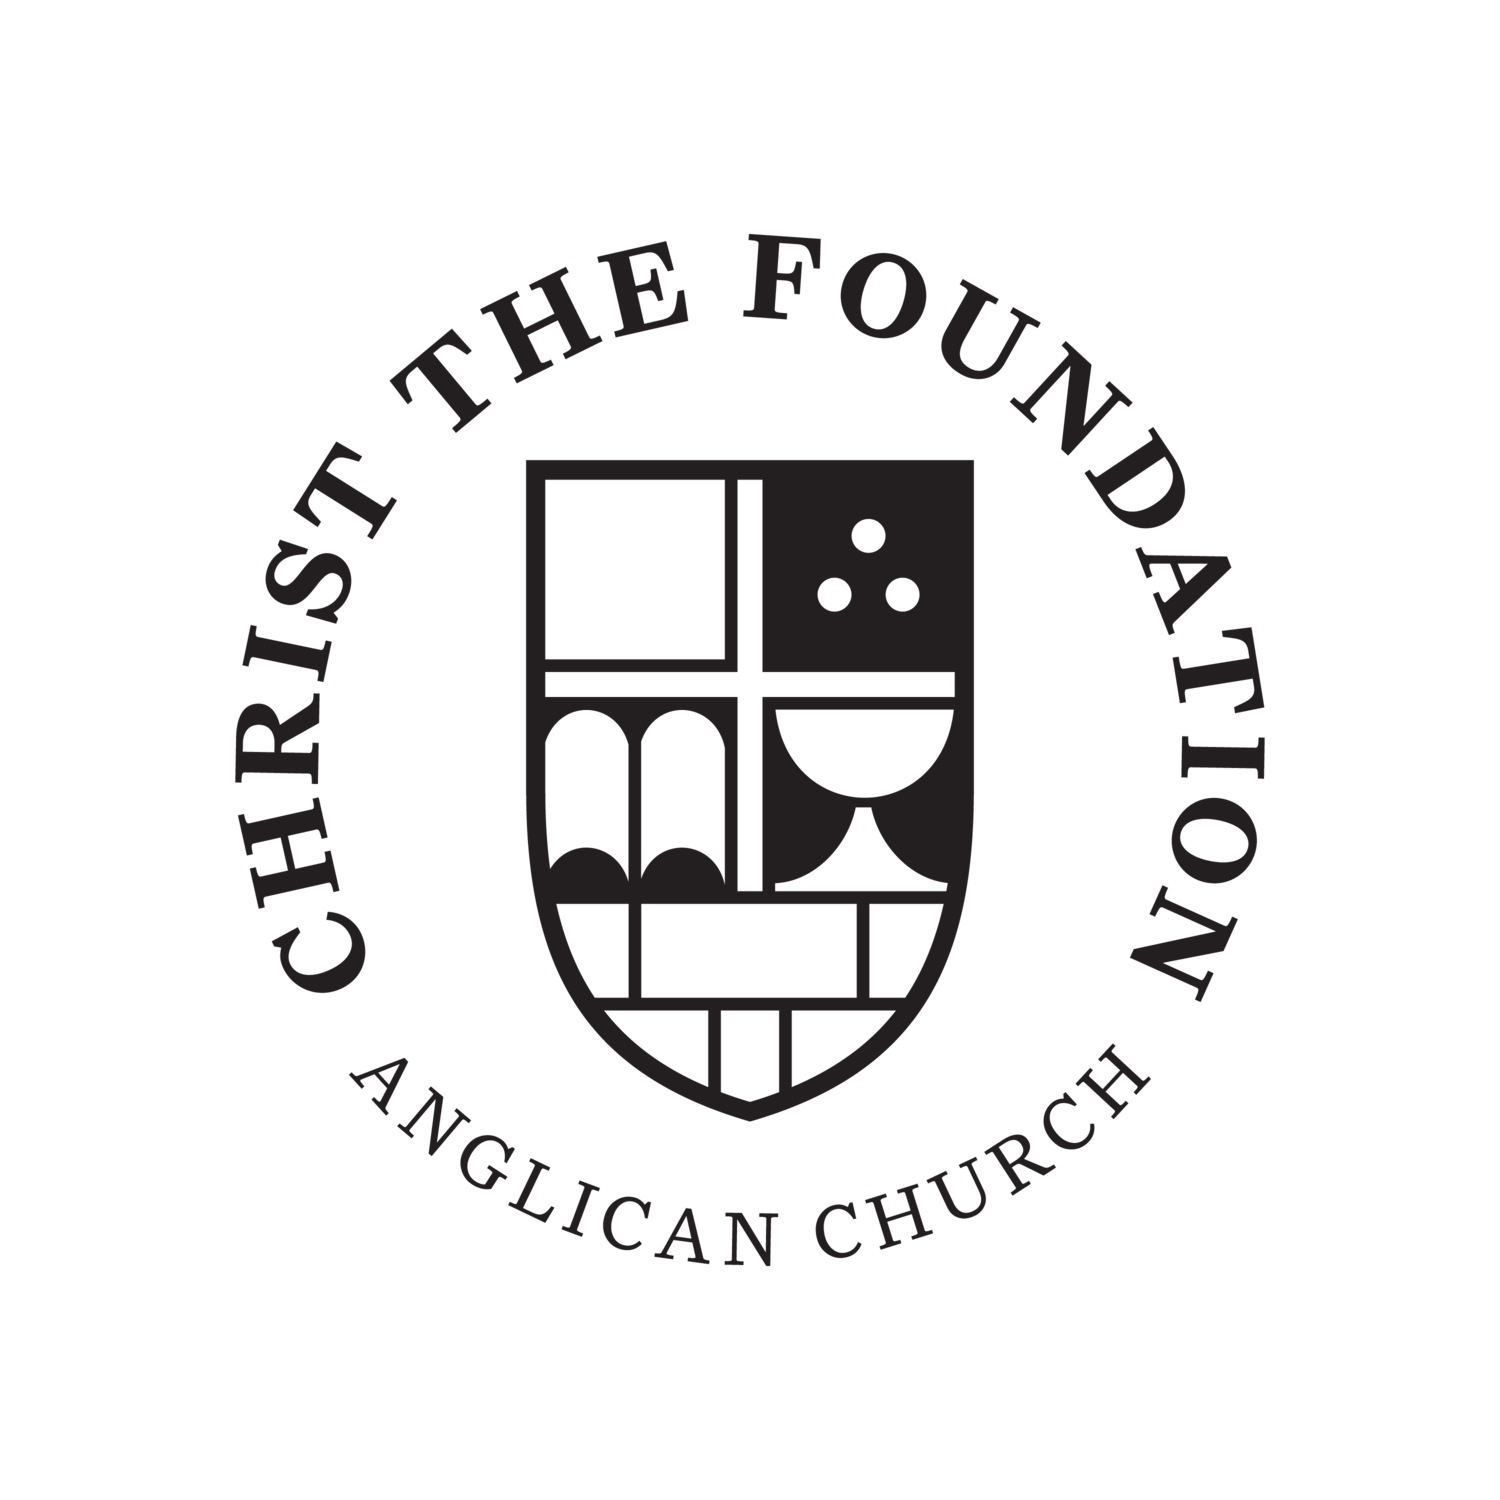 Christ The Foundation Anglican Church, Kailua